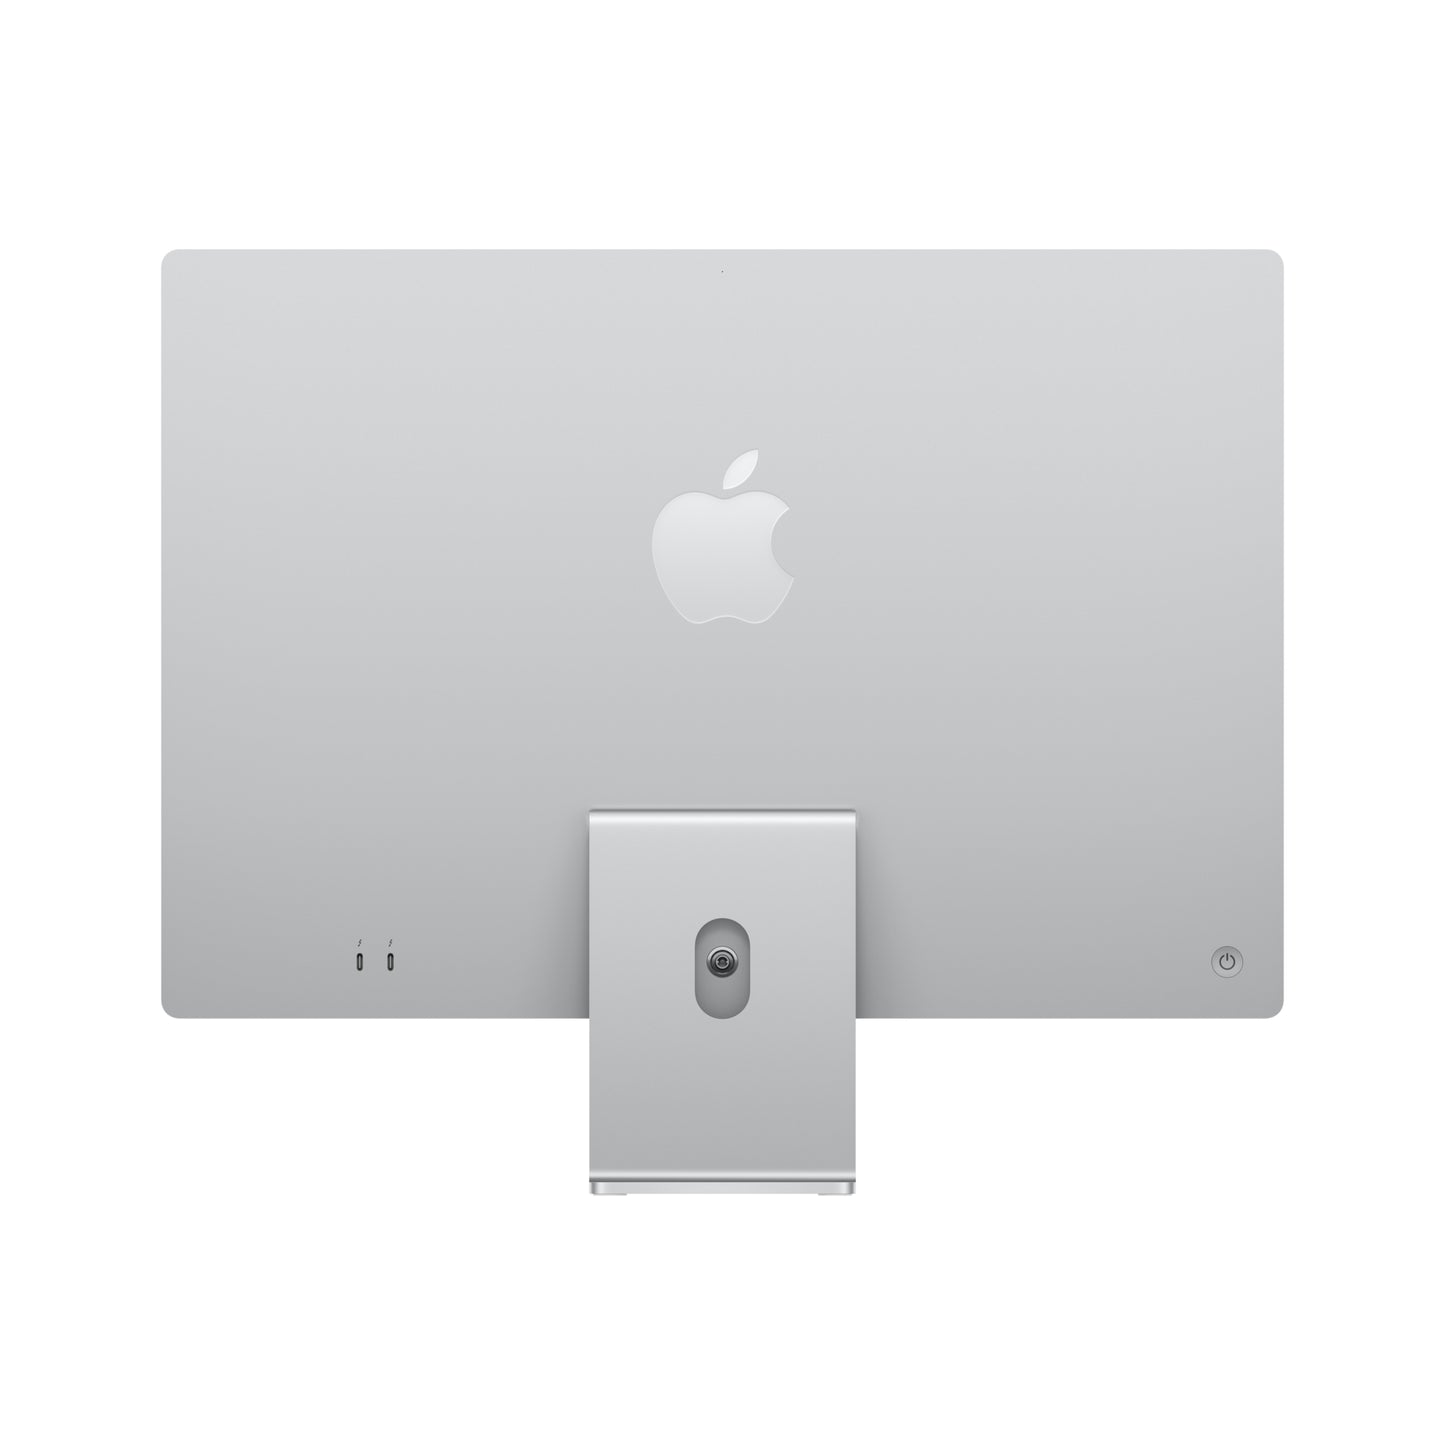 Pre-owned iMac 24-inch M1 8-core CPU / 16GB Memory / 256GB Storage - Silver (2021 Model)